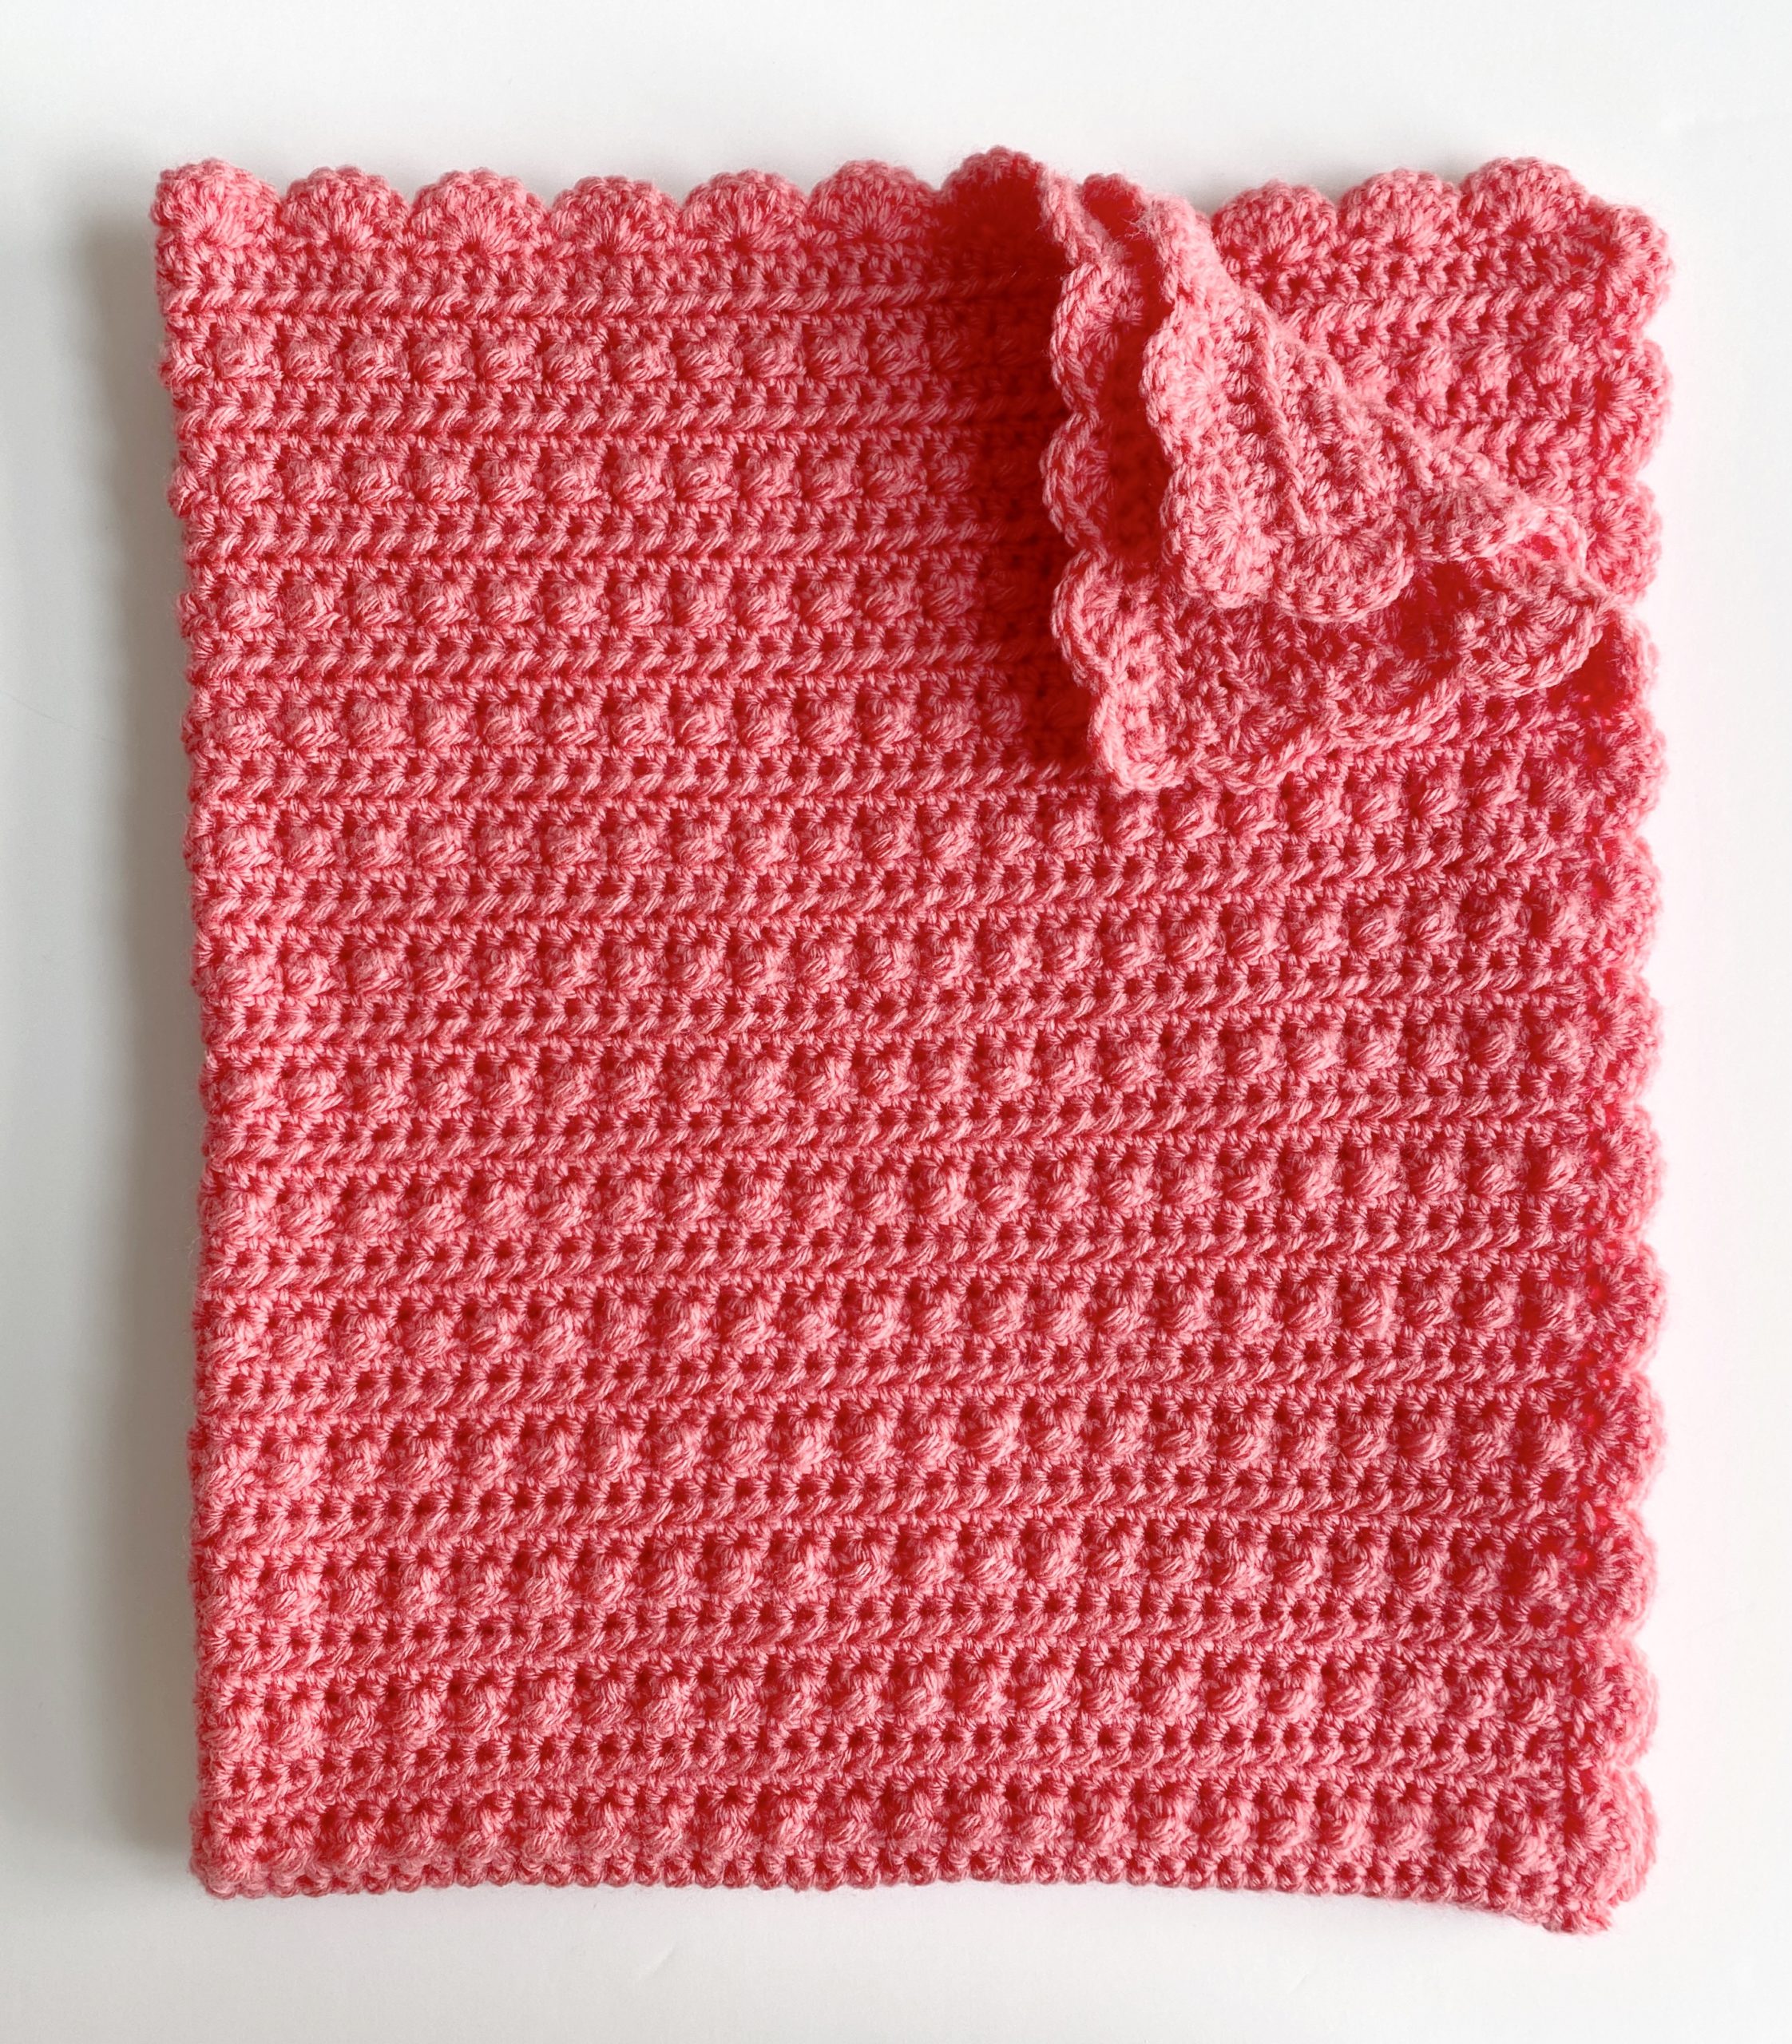 Crochet Baby Socks Pattern by Red Heart - Daisy Farm Crafts